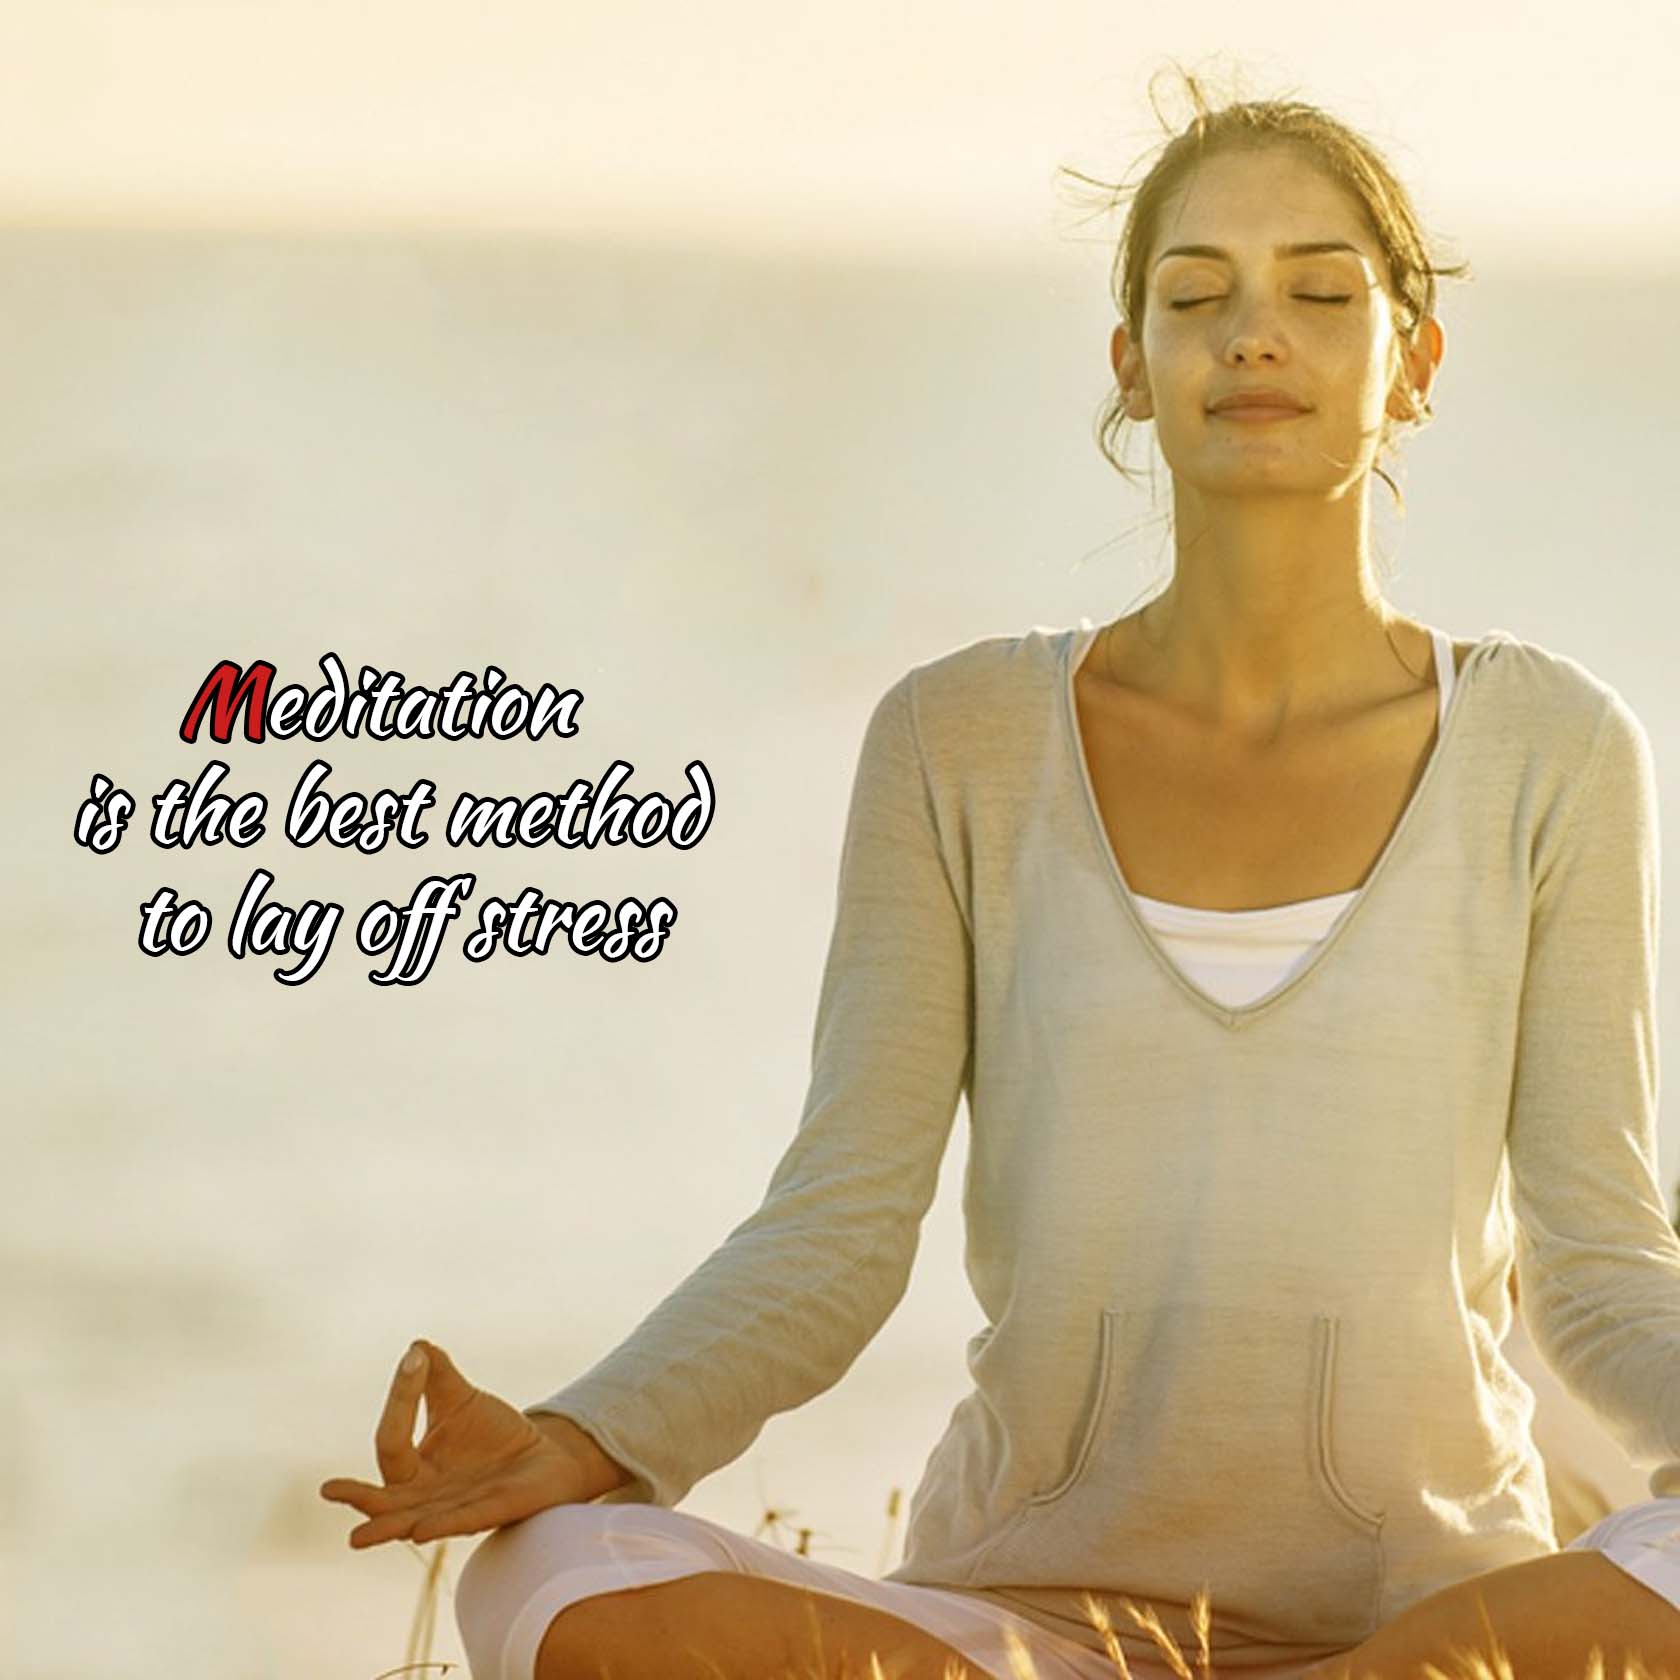 Benefits Of The Meditation